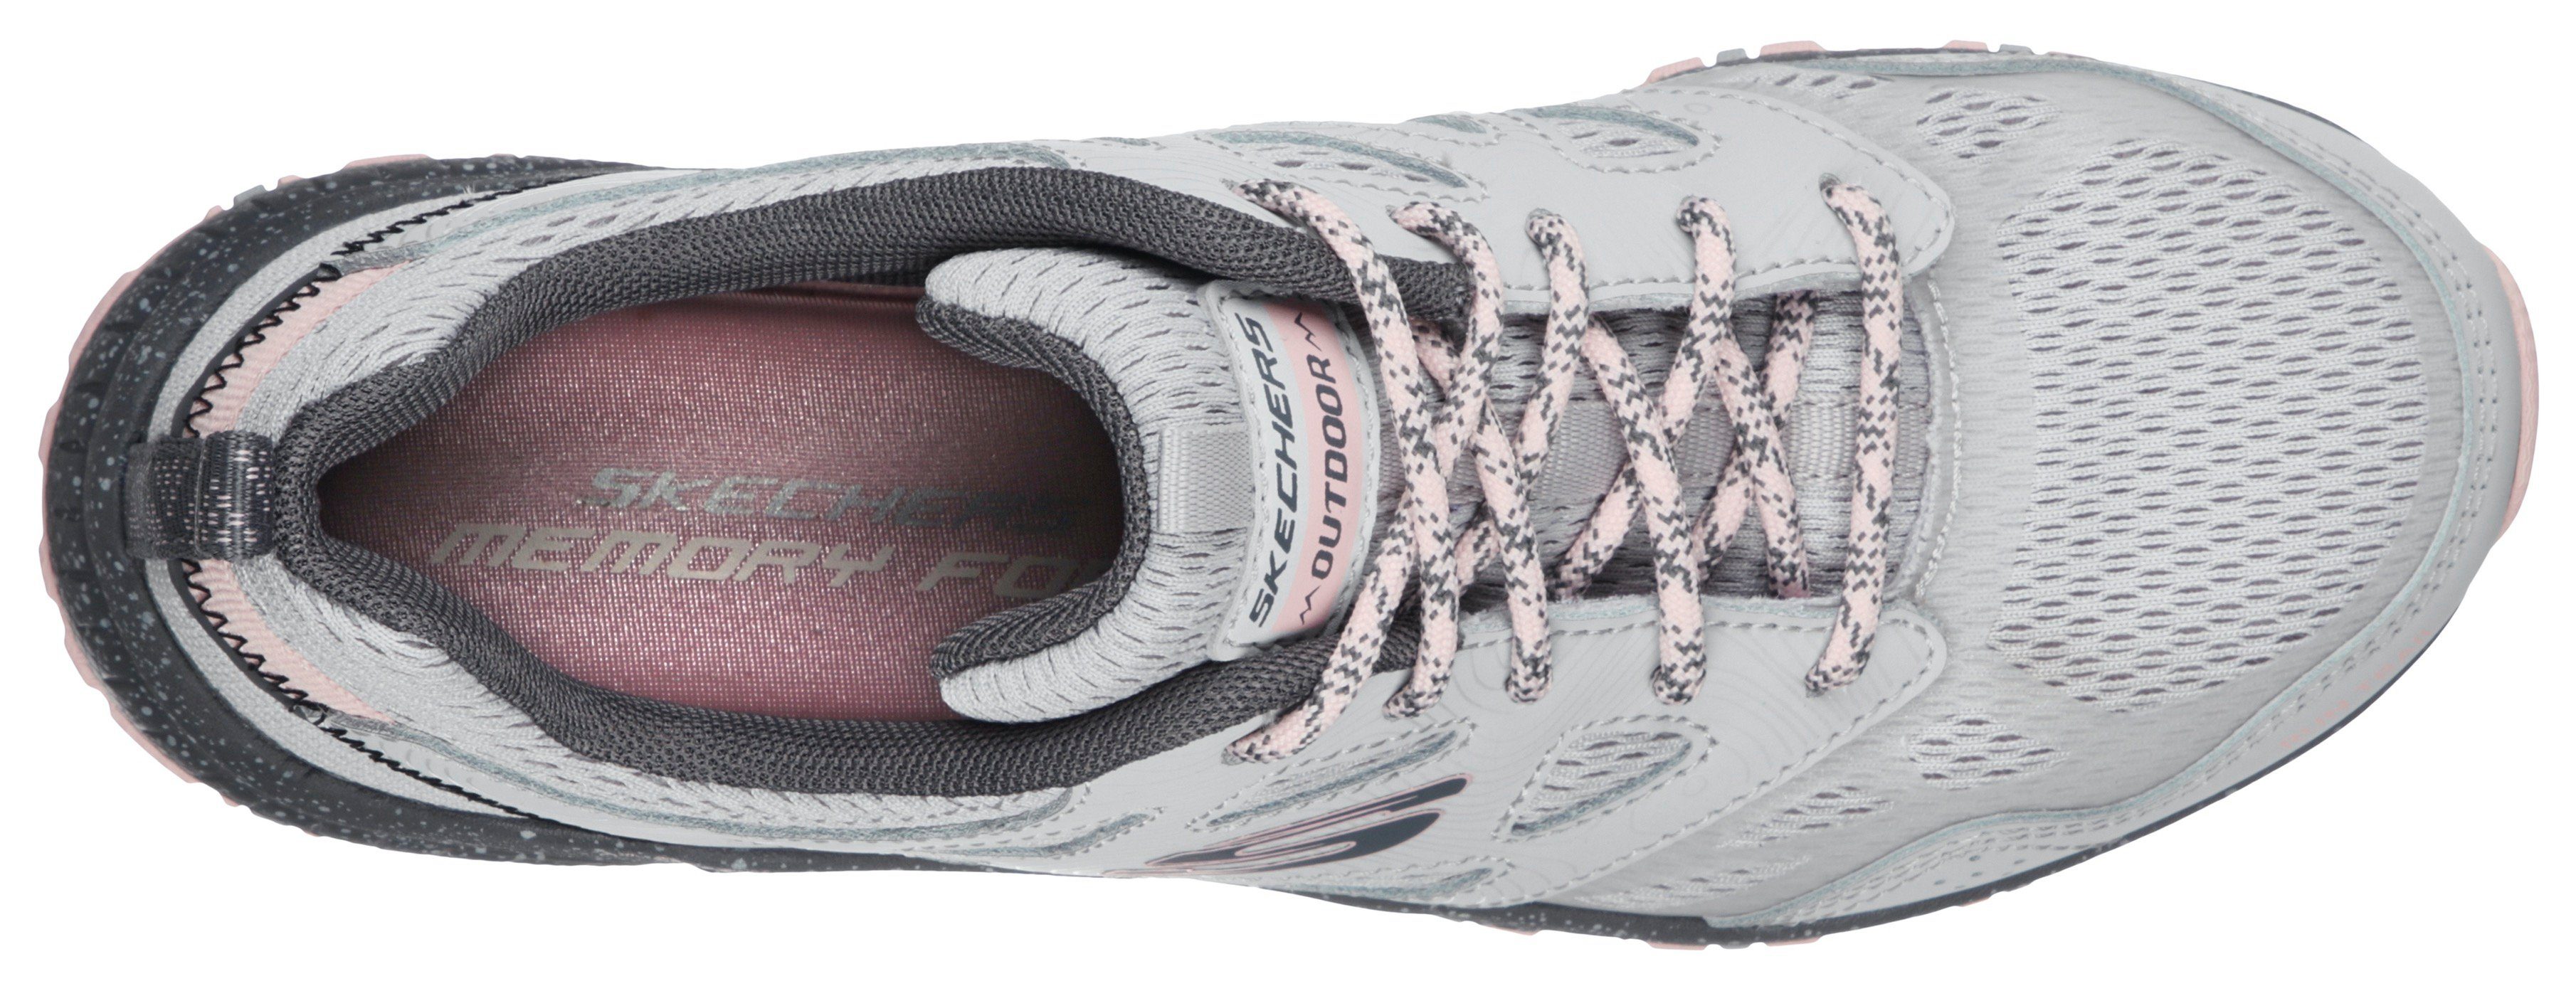 Skechers HILLCREST PURE im ESCAPADE Sneaker grau-pink Materialmix